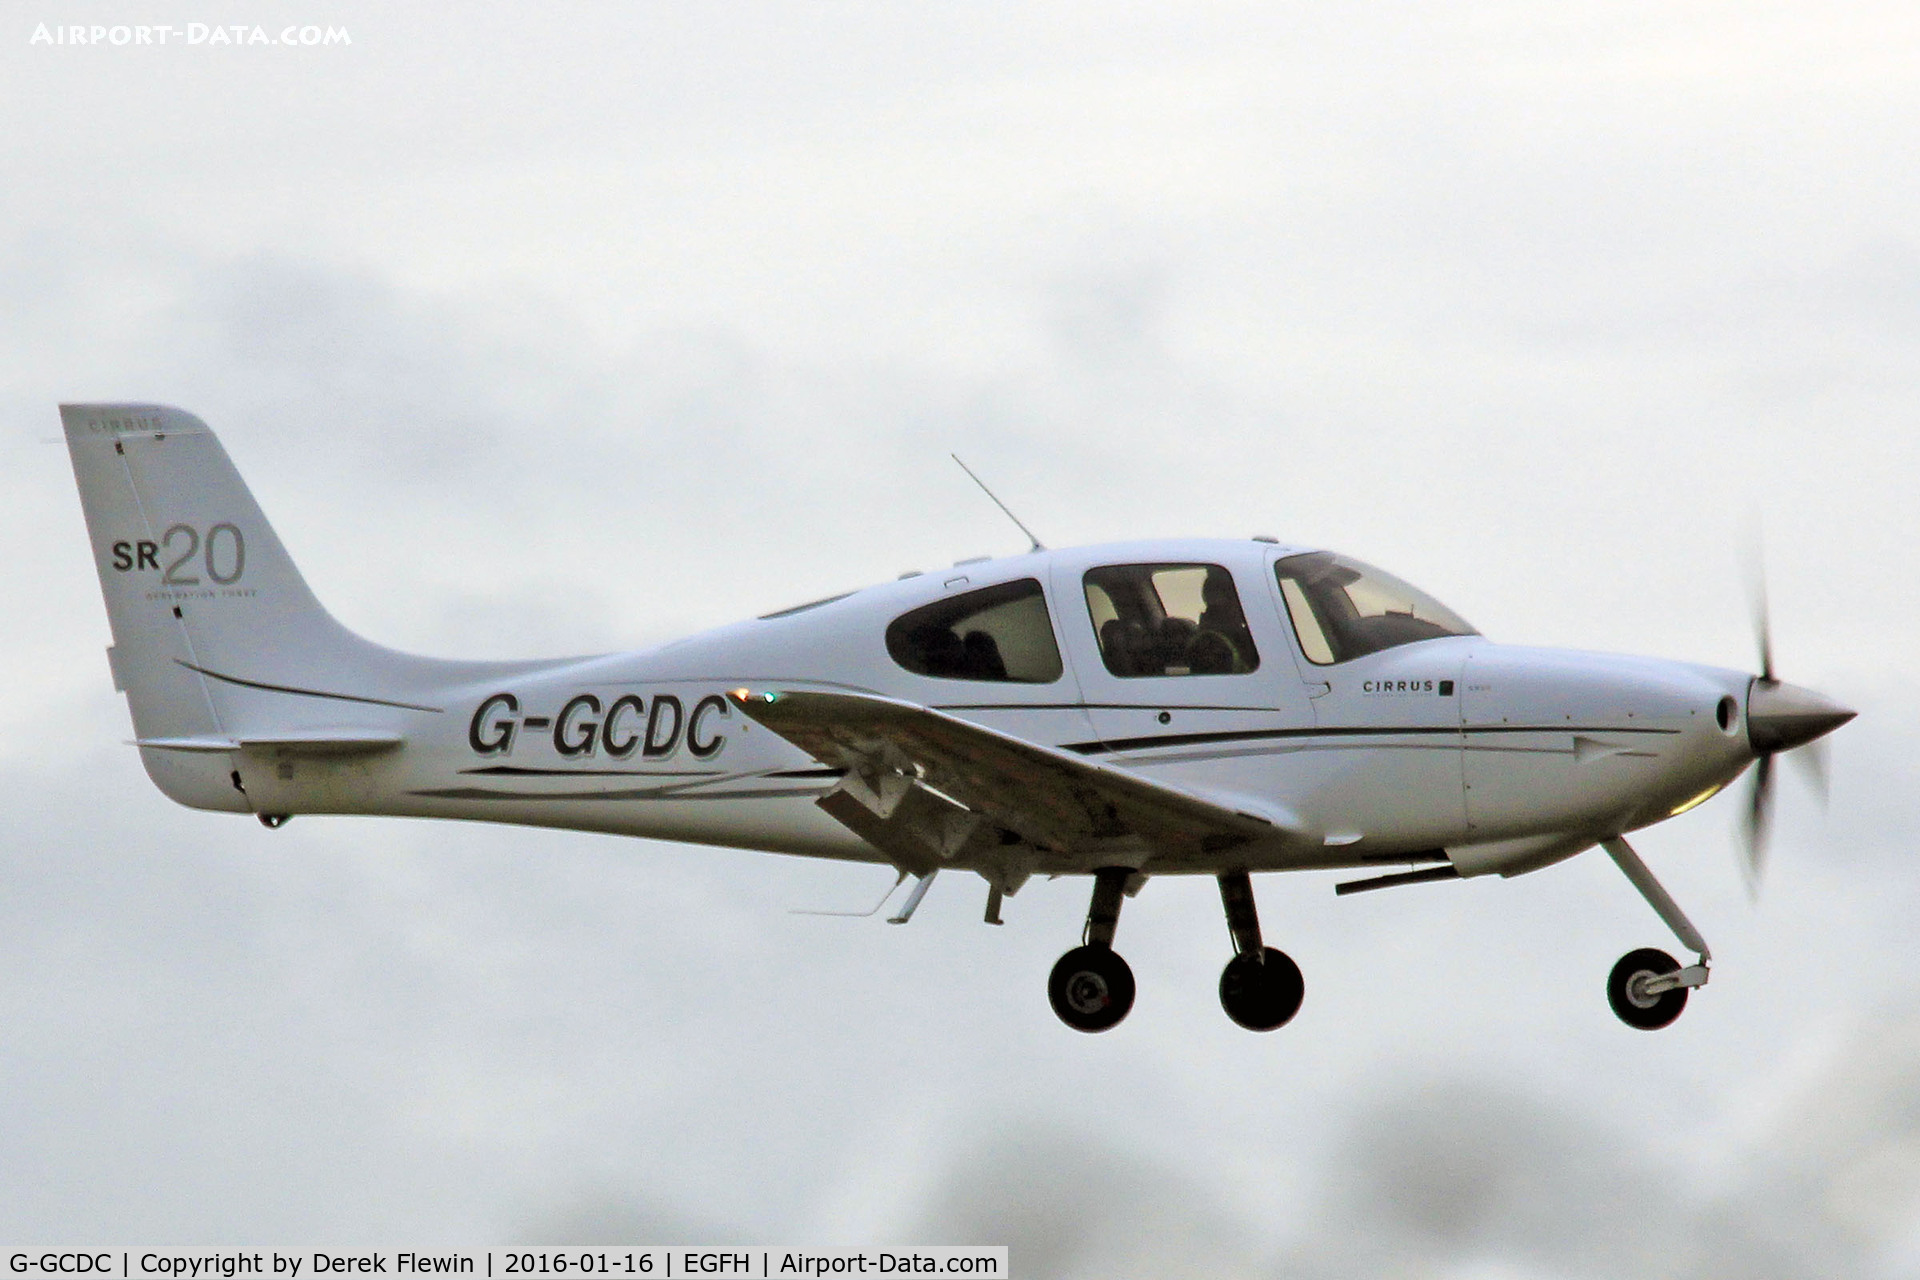 G-GCDC, 2008 Cirrus SR20 G3 C/N 2008, SR20 G3, EGFH resident, previously N553PG, seen landing on runway 28.